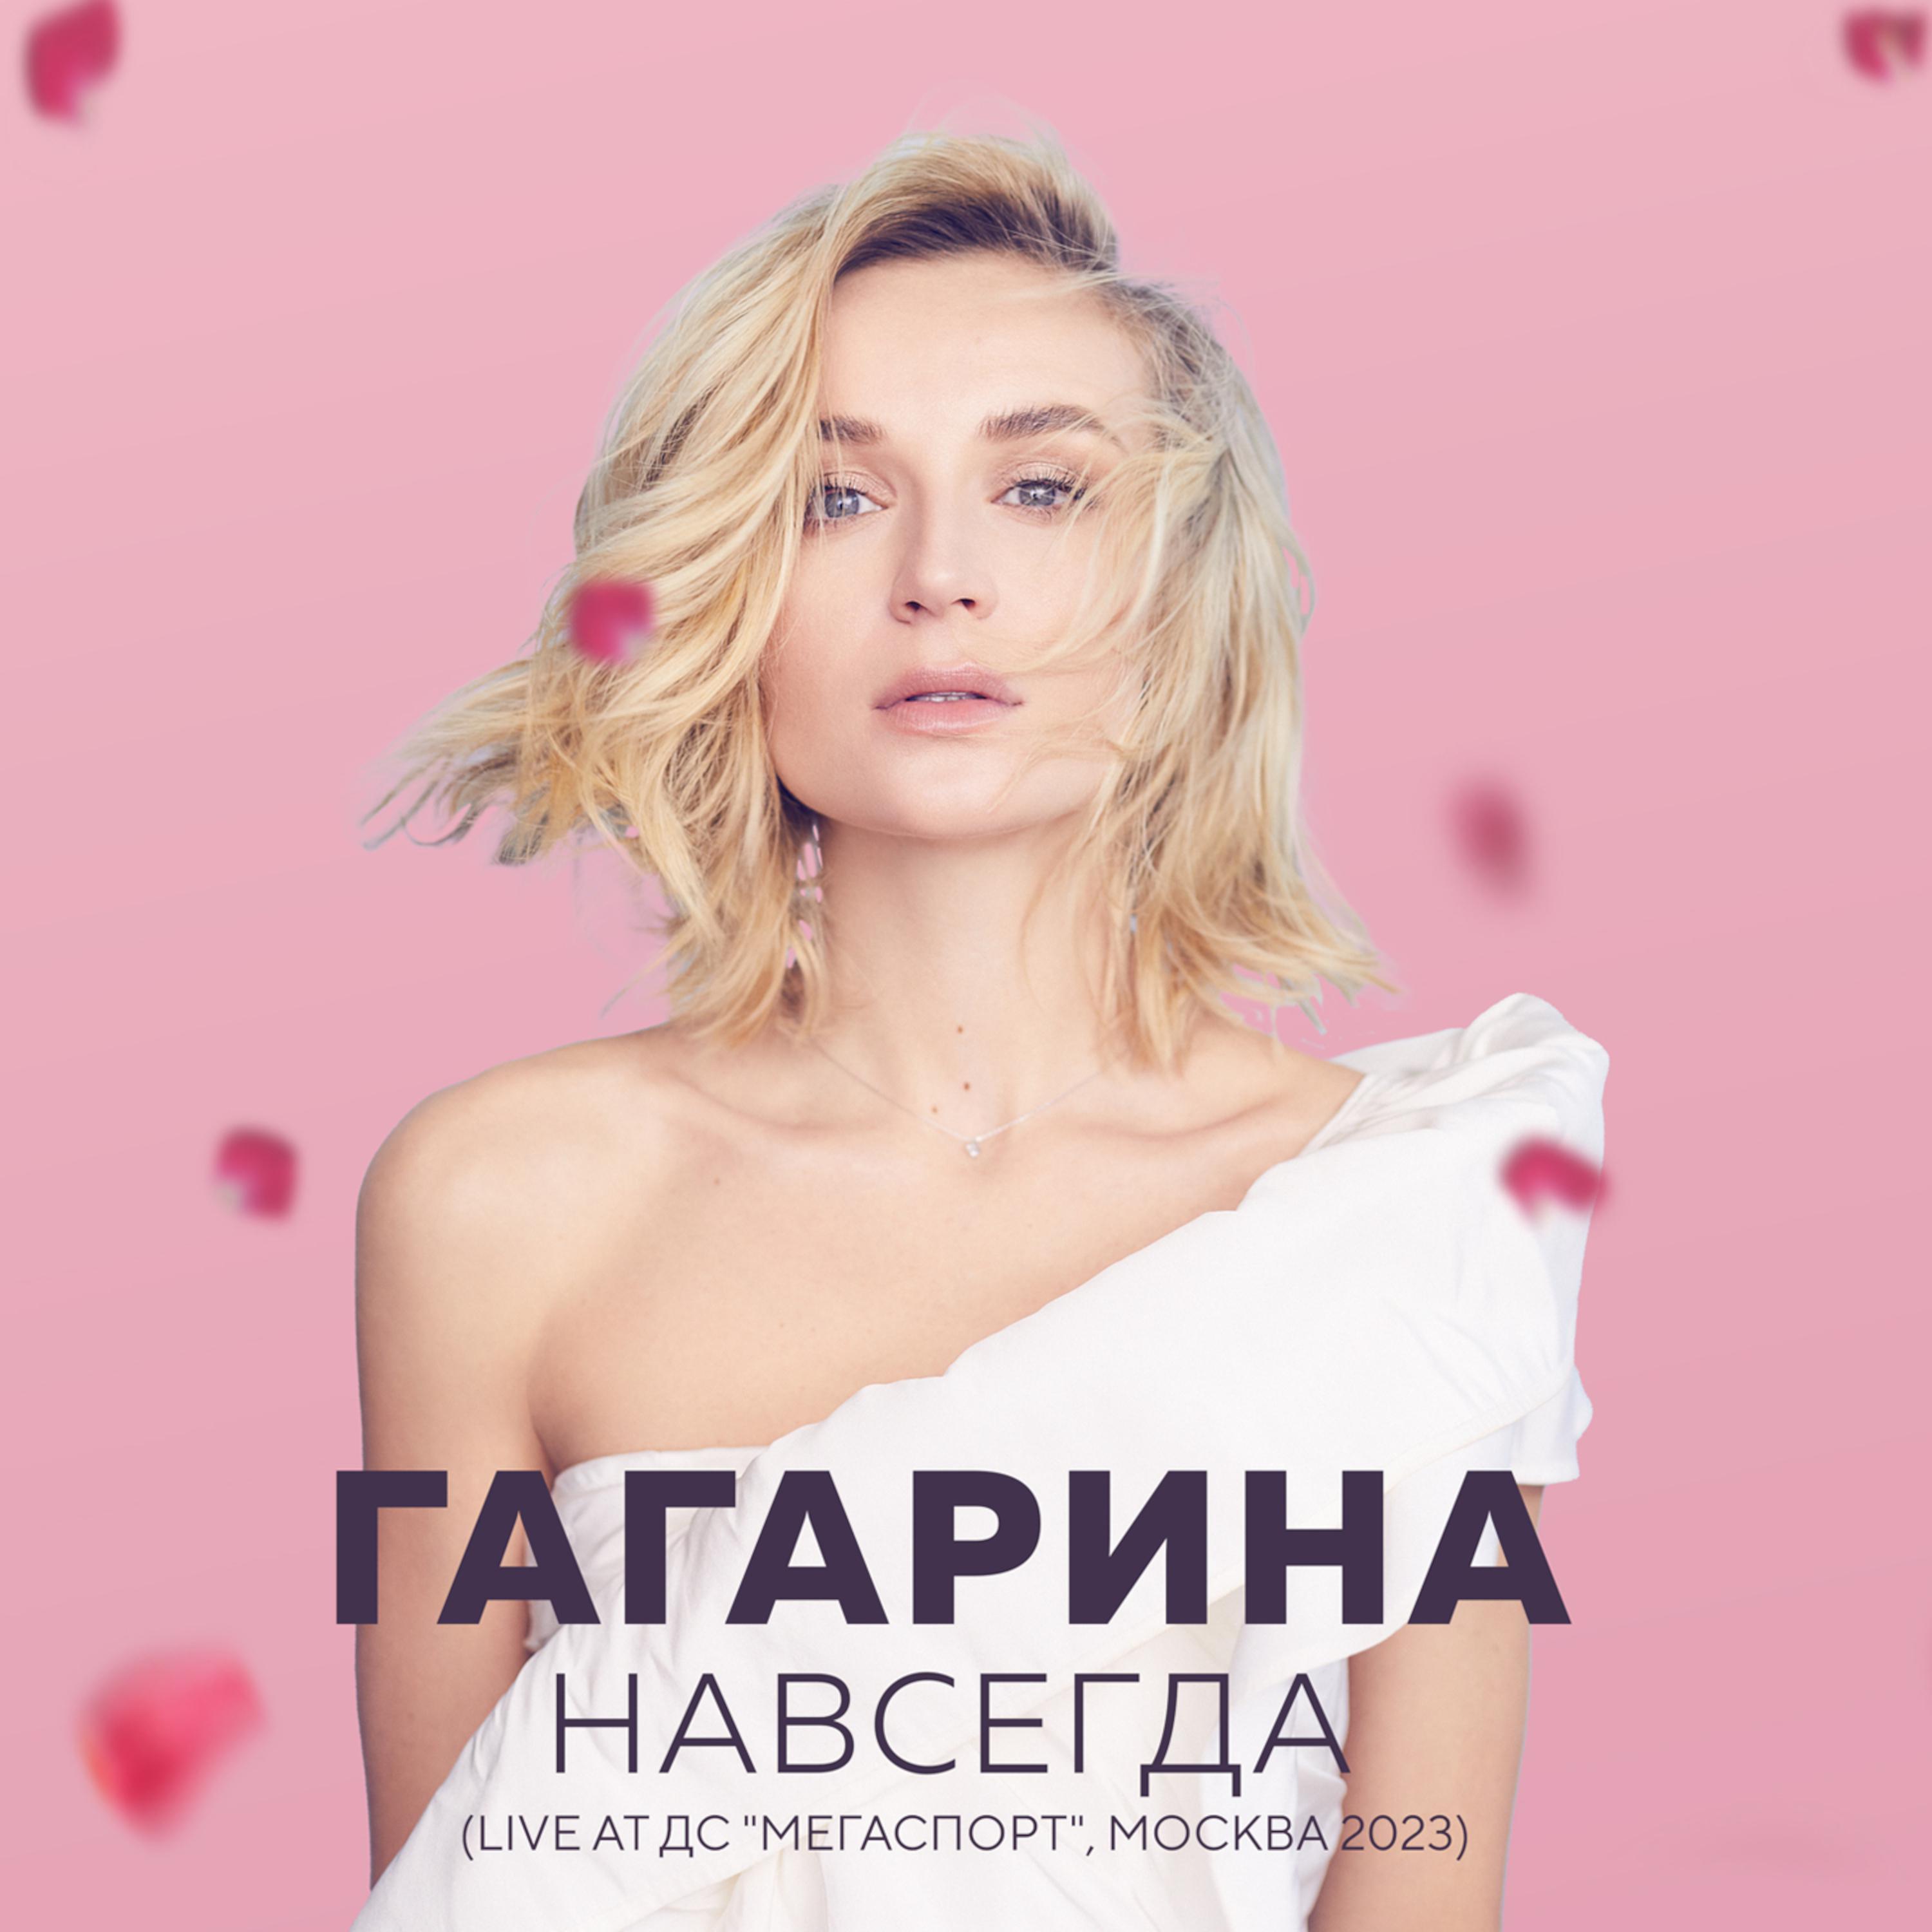 Polina Gagarina - Драмы больше нет (Live at Мегаспорт, Москва, 2023)